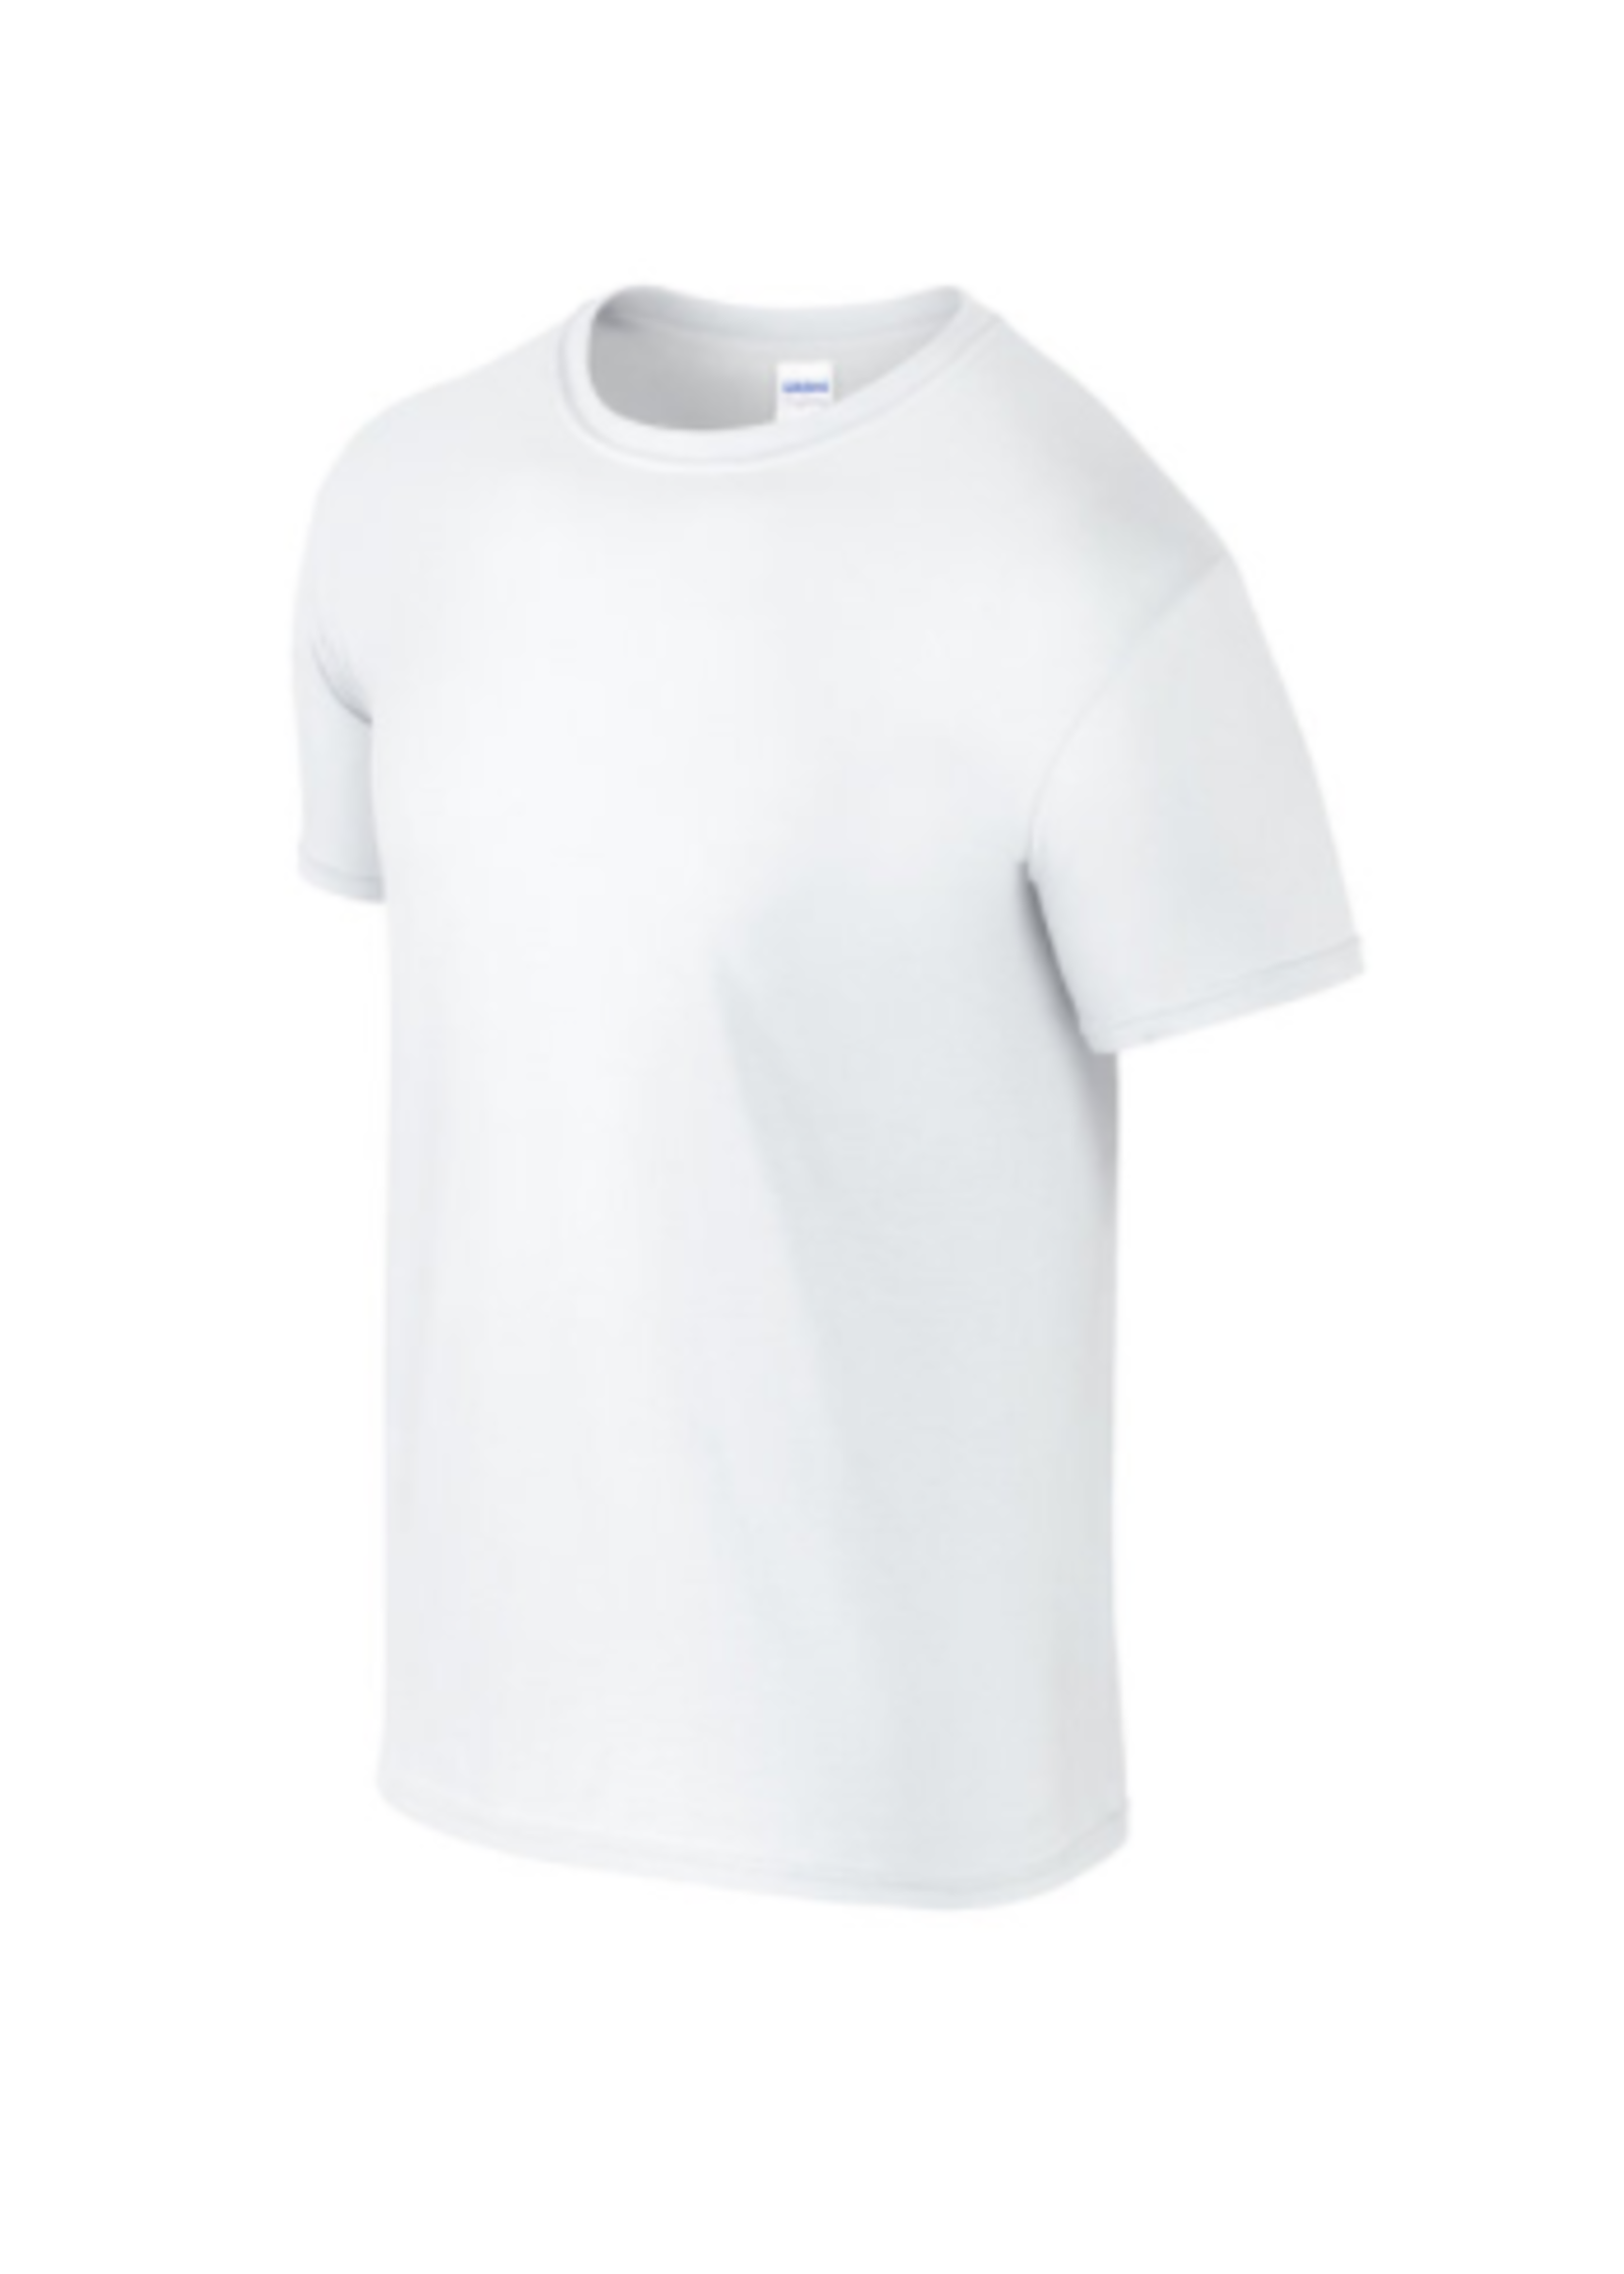 NON-UNIFORM Juan Diego Youth Football S/S Shirt